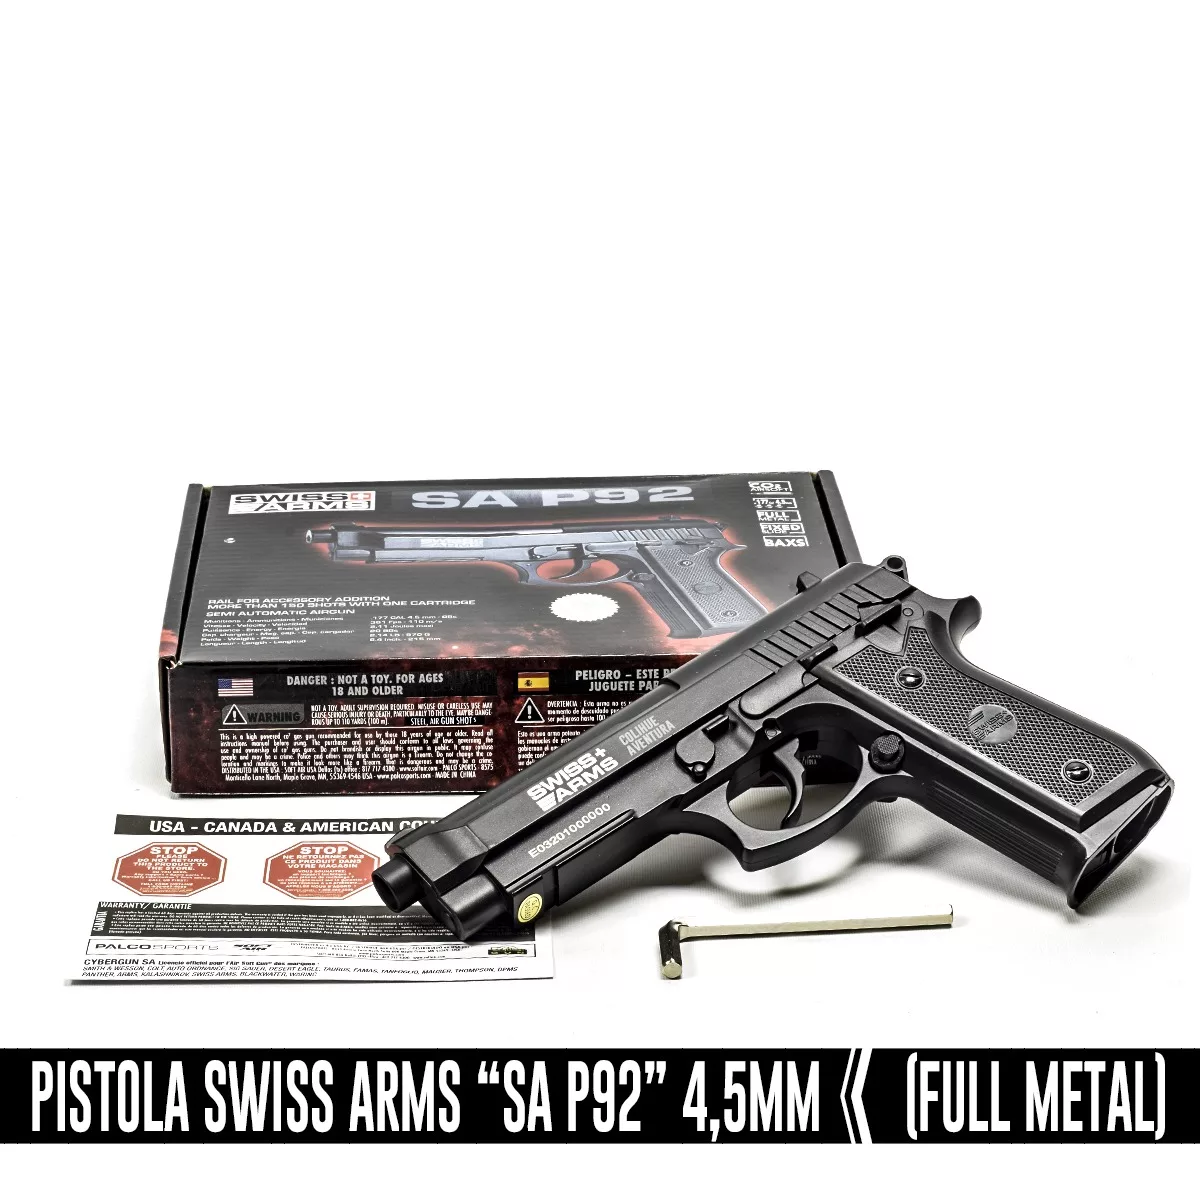 Pistola Balines Co2 Full Metal P92 Corredera Fija